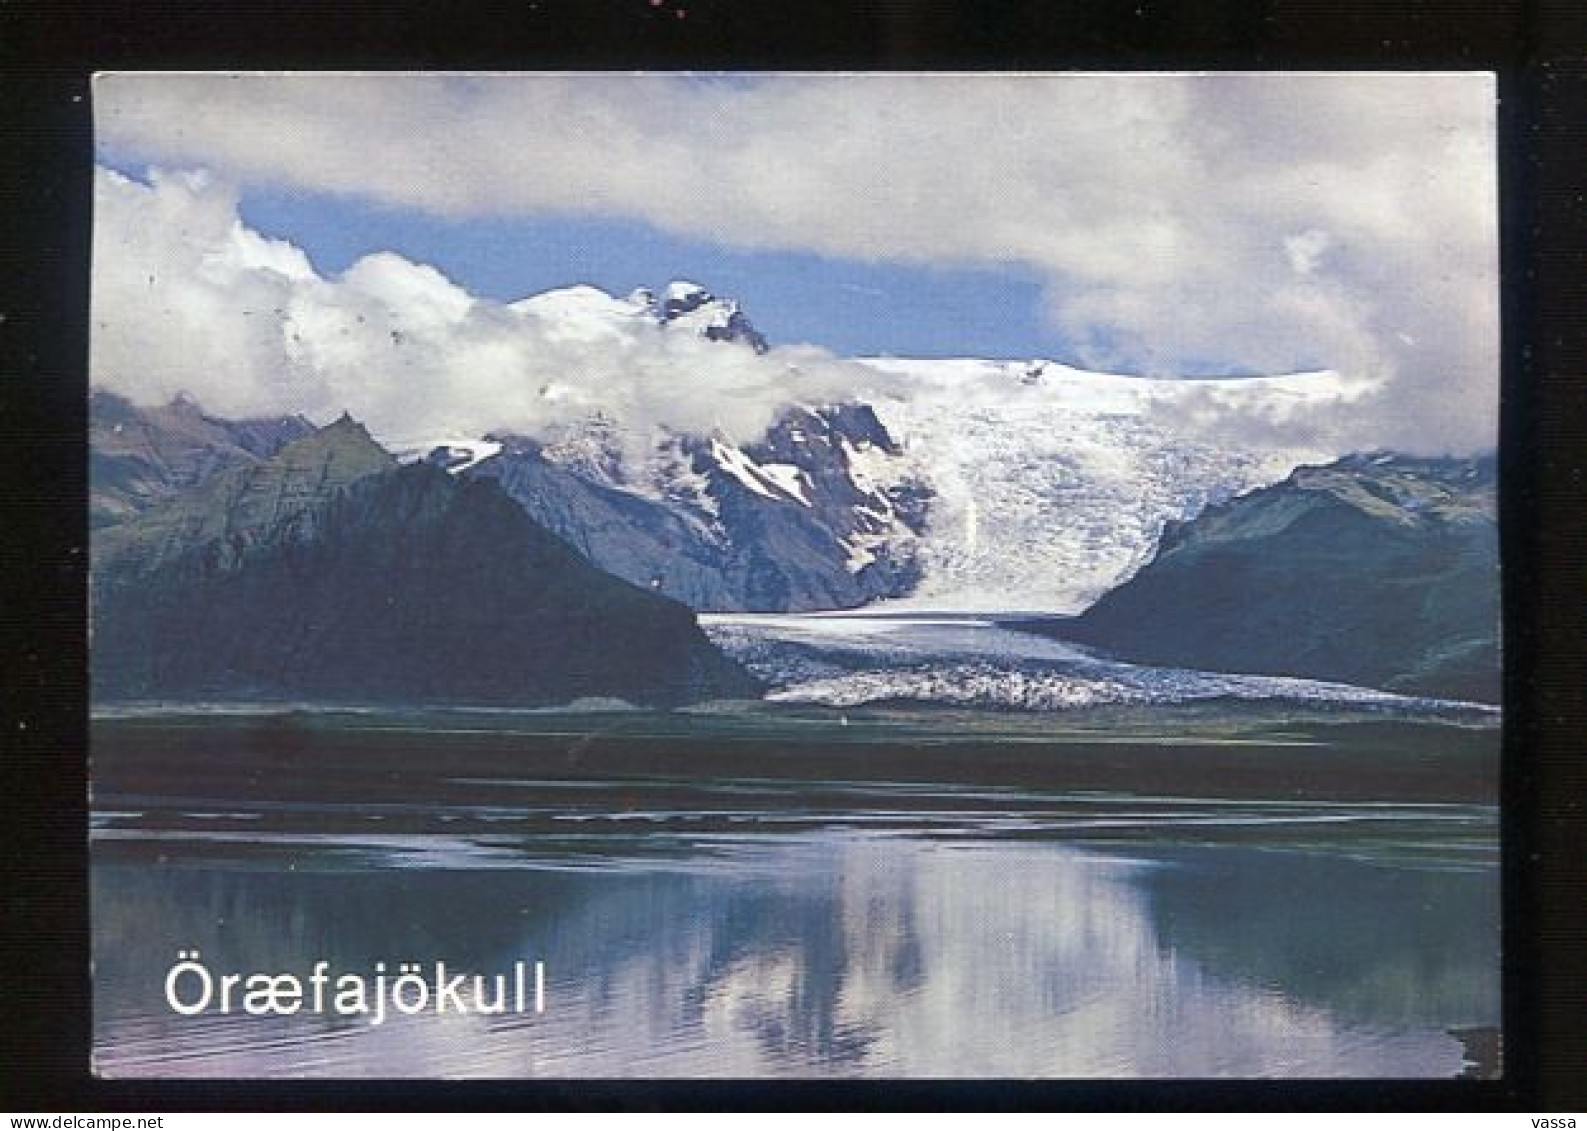 ICELAND. - The Glacier Öaefajökull - Iceland